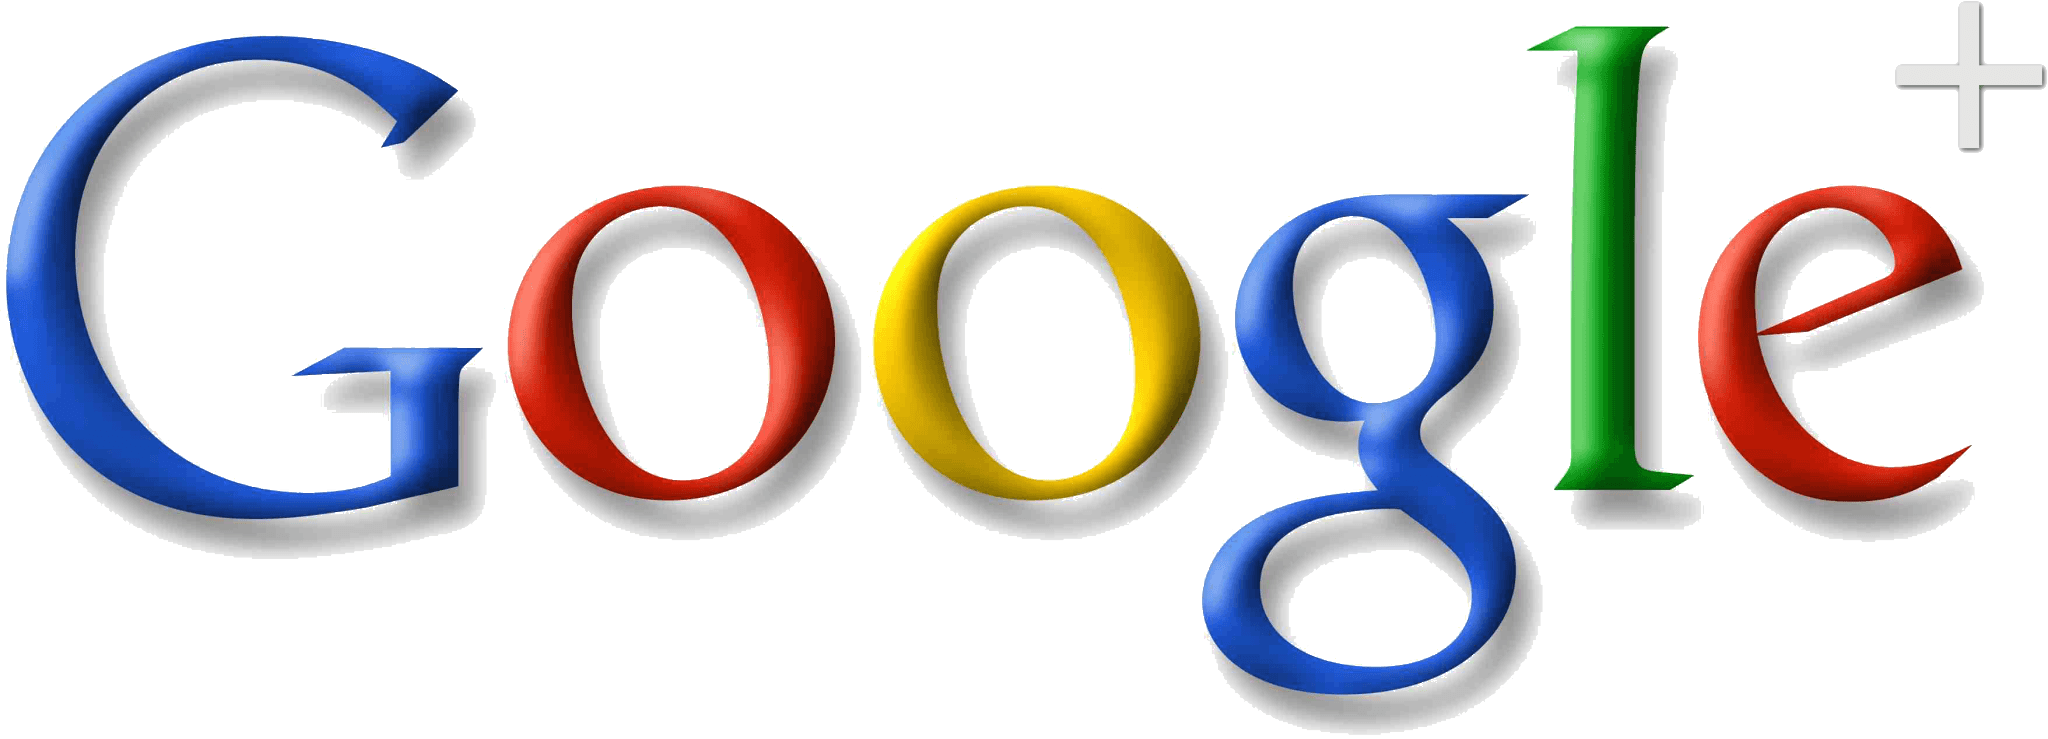 Google Plus Search Png Logo - Google Old Logo Png (2048x739), Png Download